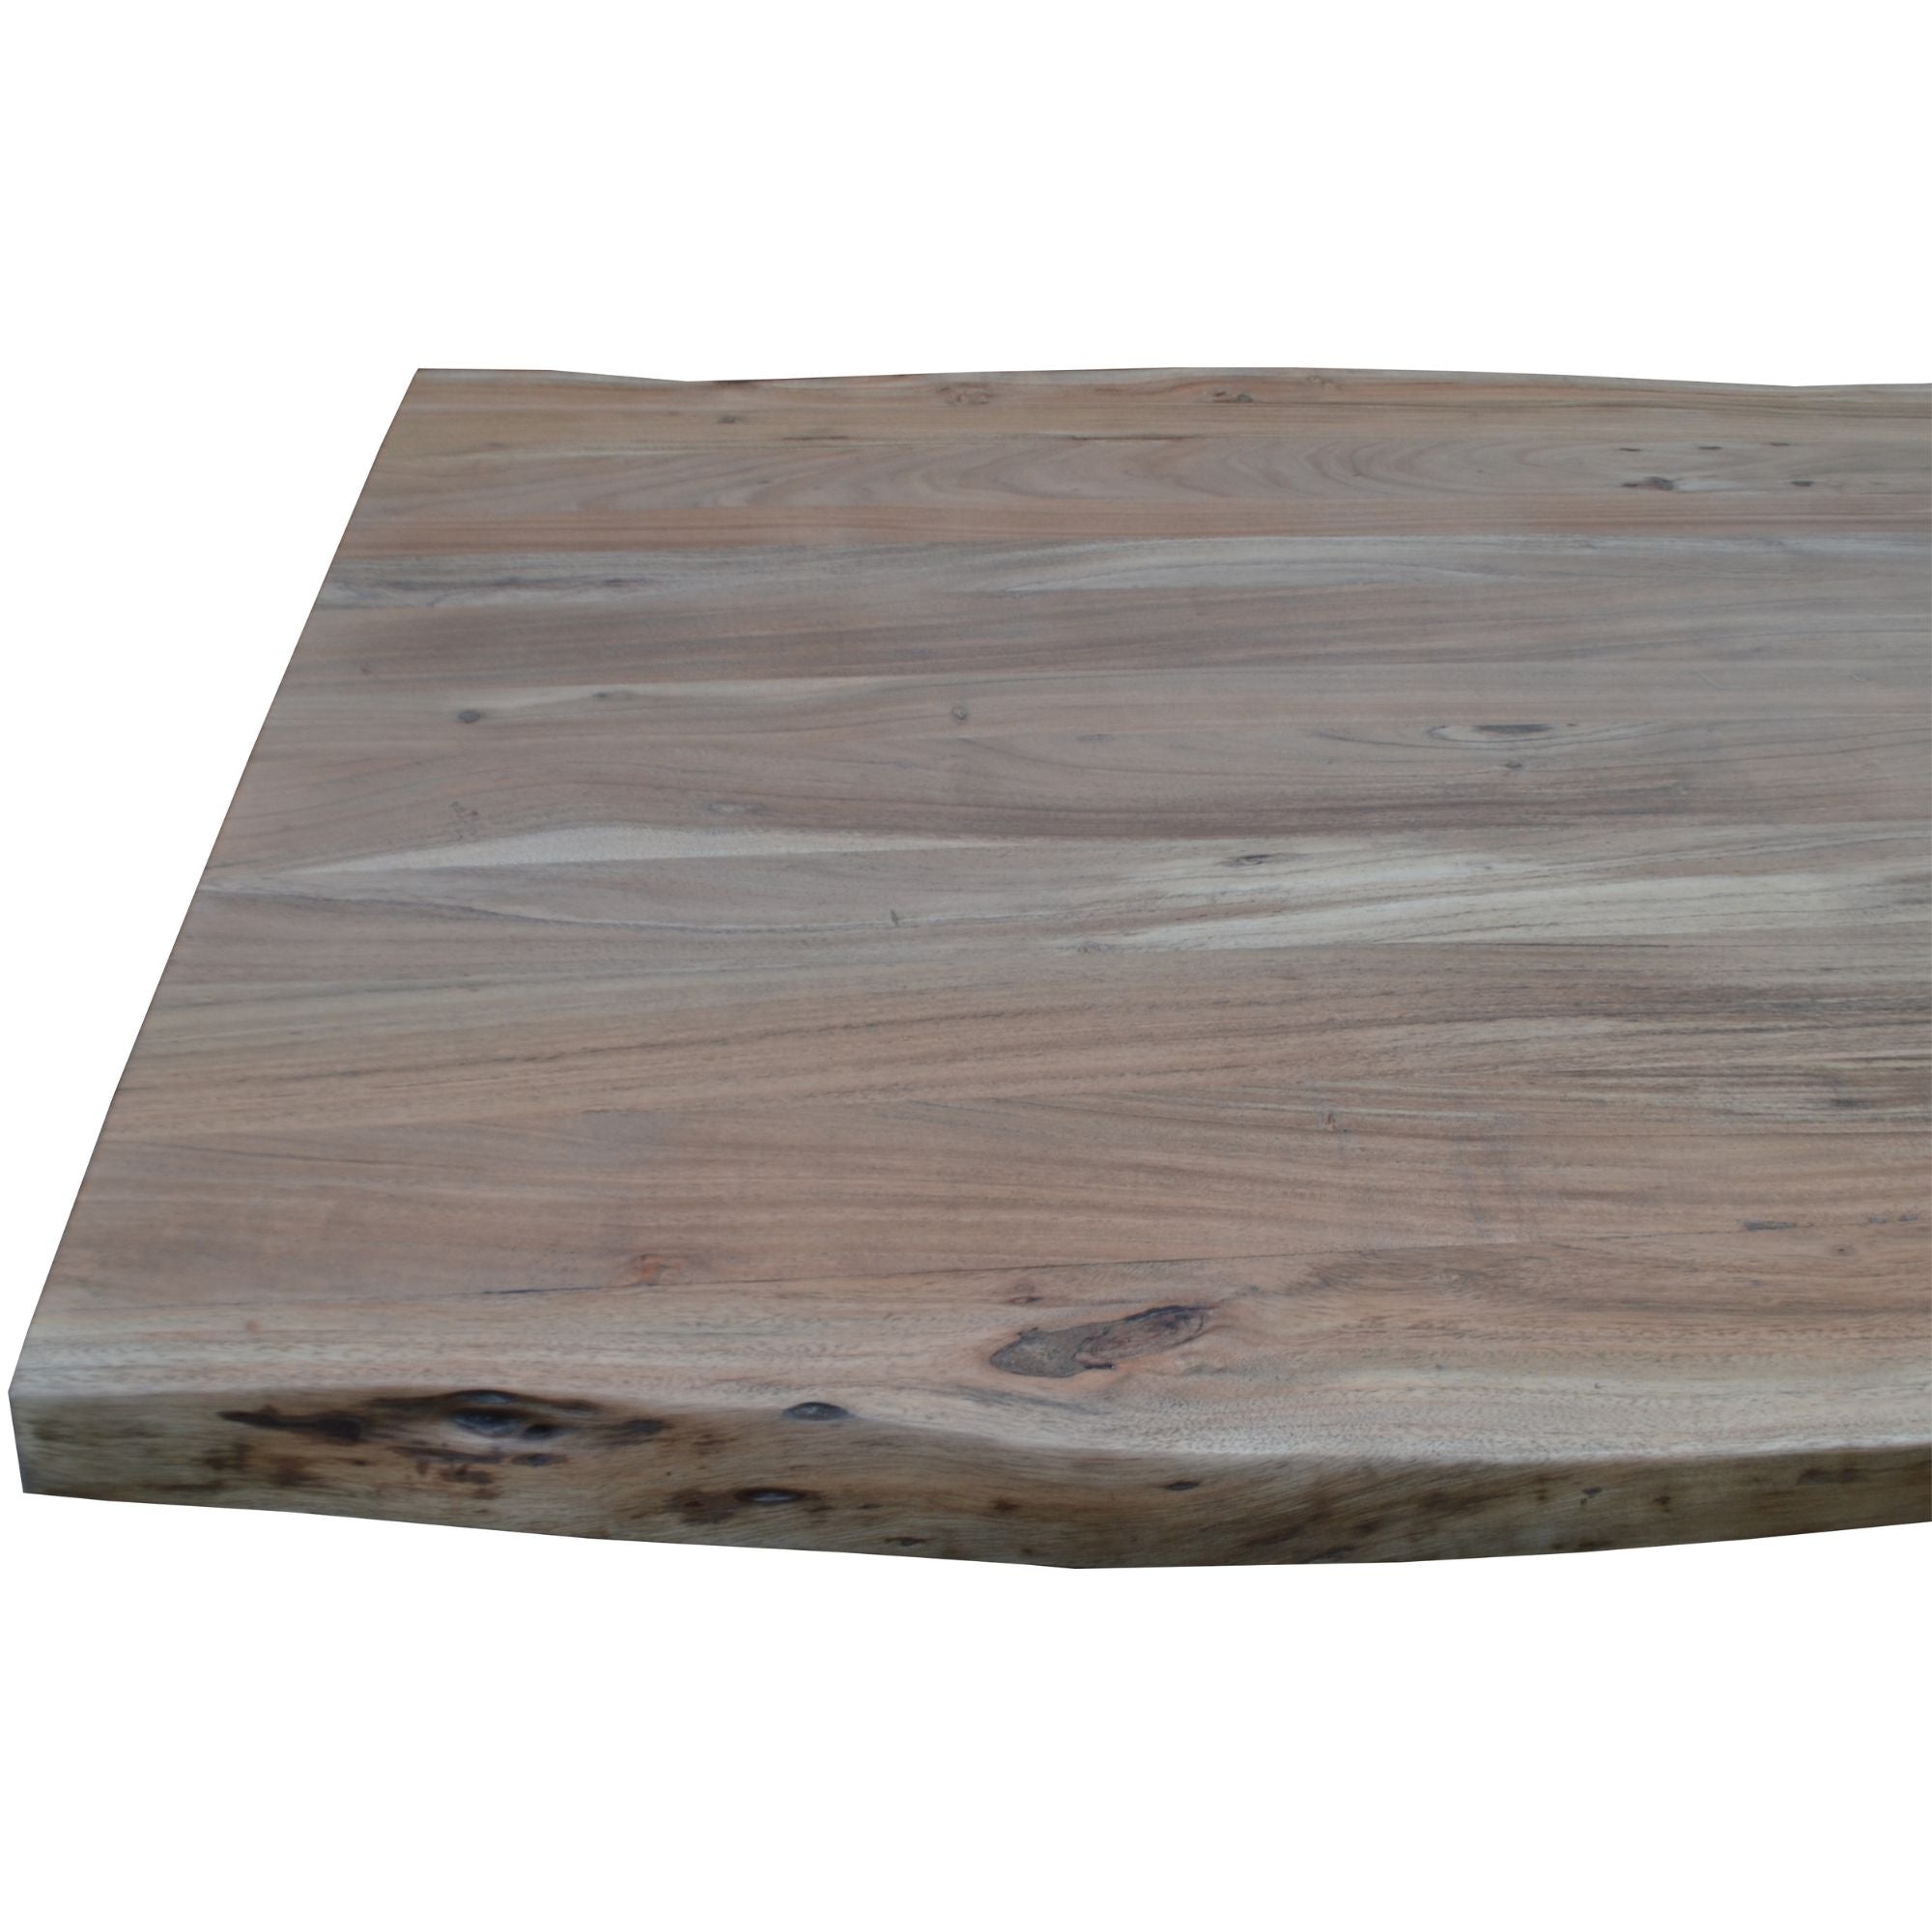 Lantana Dining Table 210cm Live Edge Solid Acacia Timber Wood Metal Leg -Natural